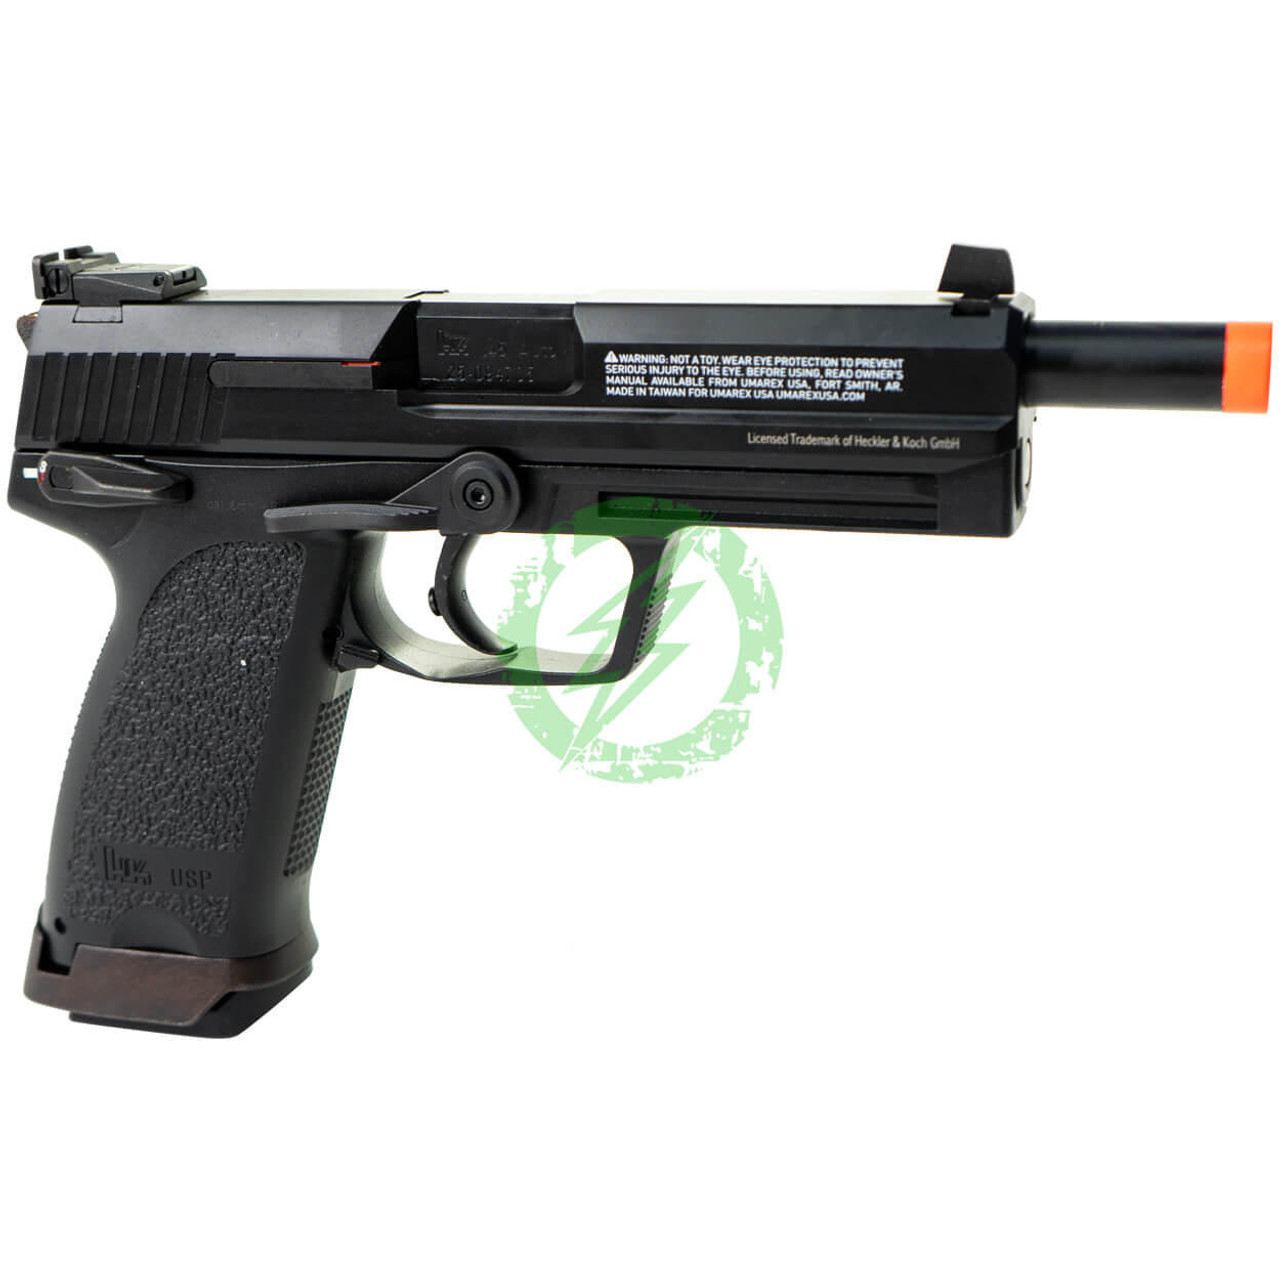  KWA Exclusive Heckler & Koch USP Match Gas Blowback Airsoft Pistol 